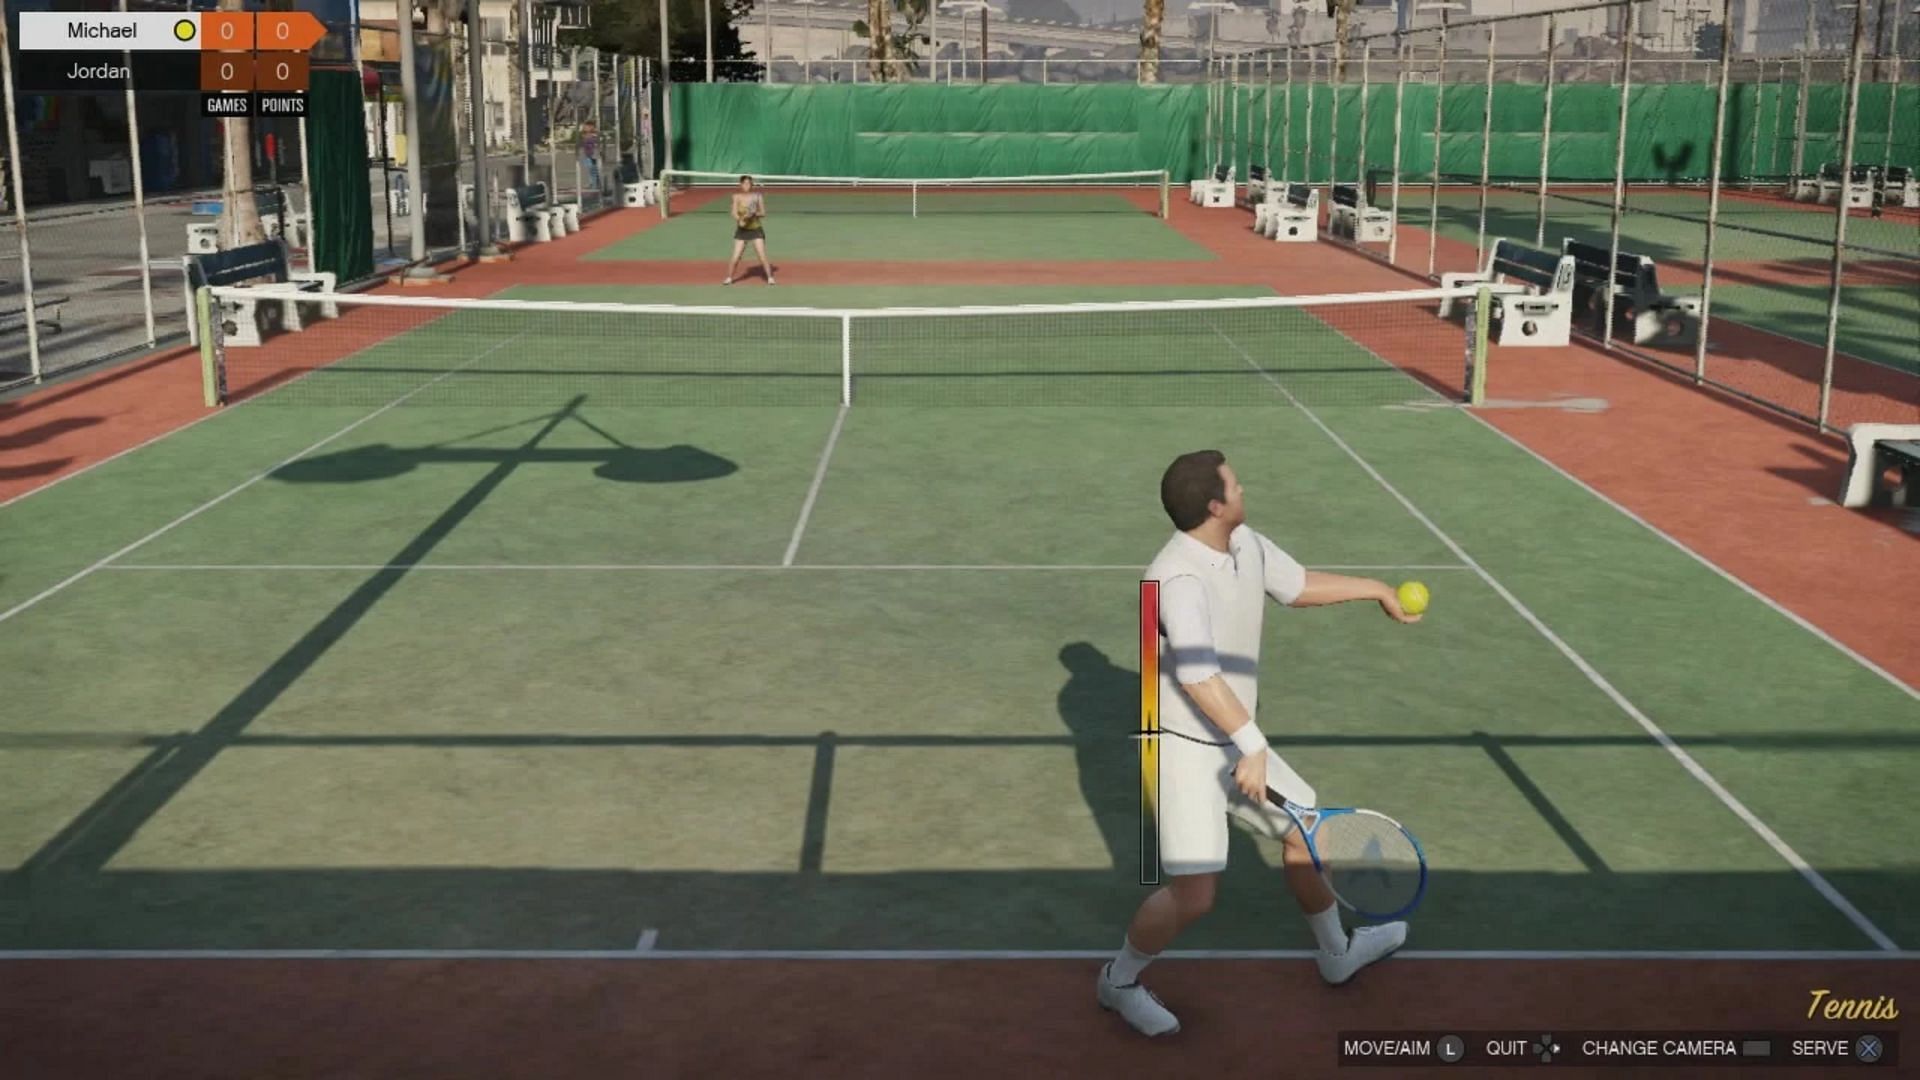 Tennis is very popular in GTA 5 (Image via GTA Wiki/Instulent)